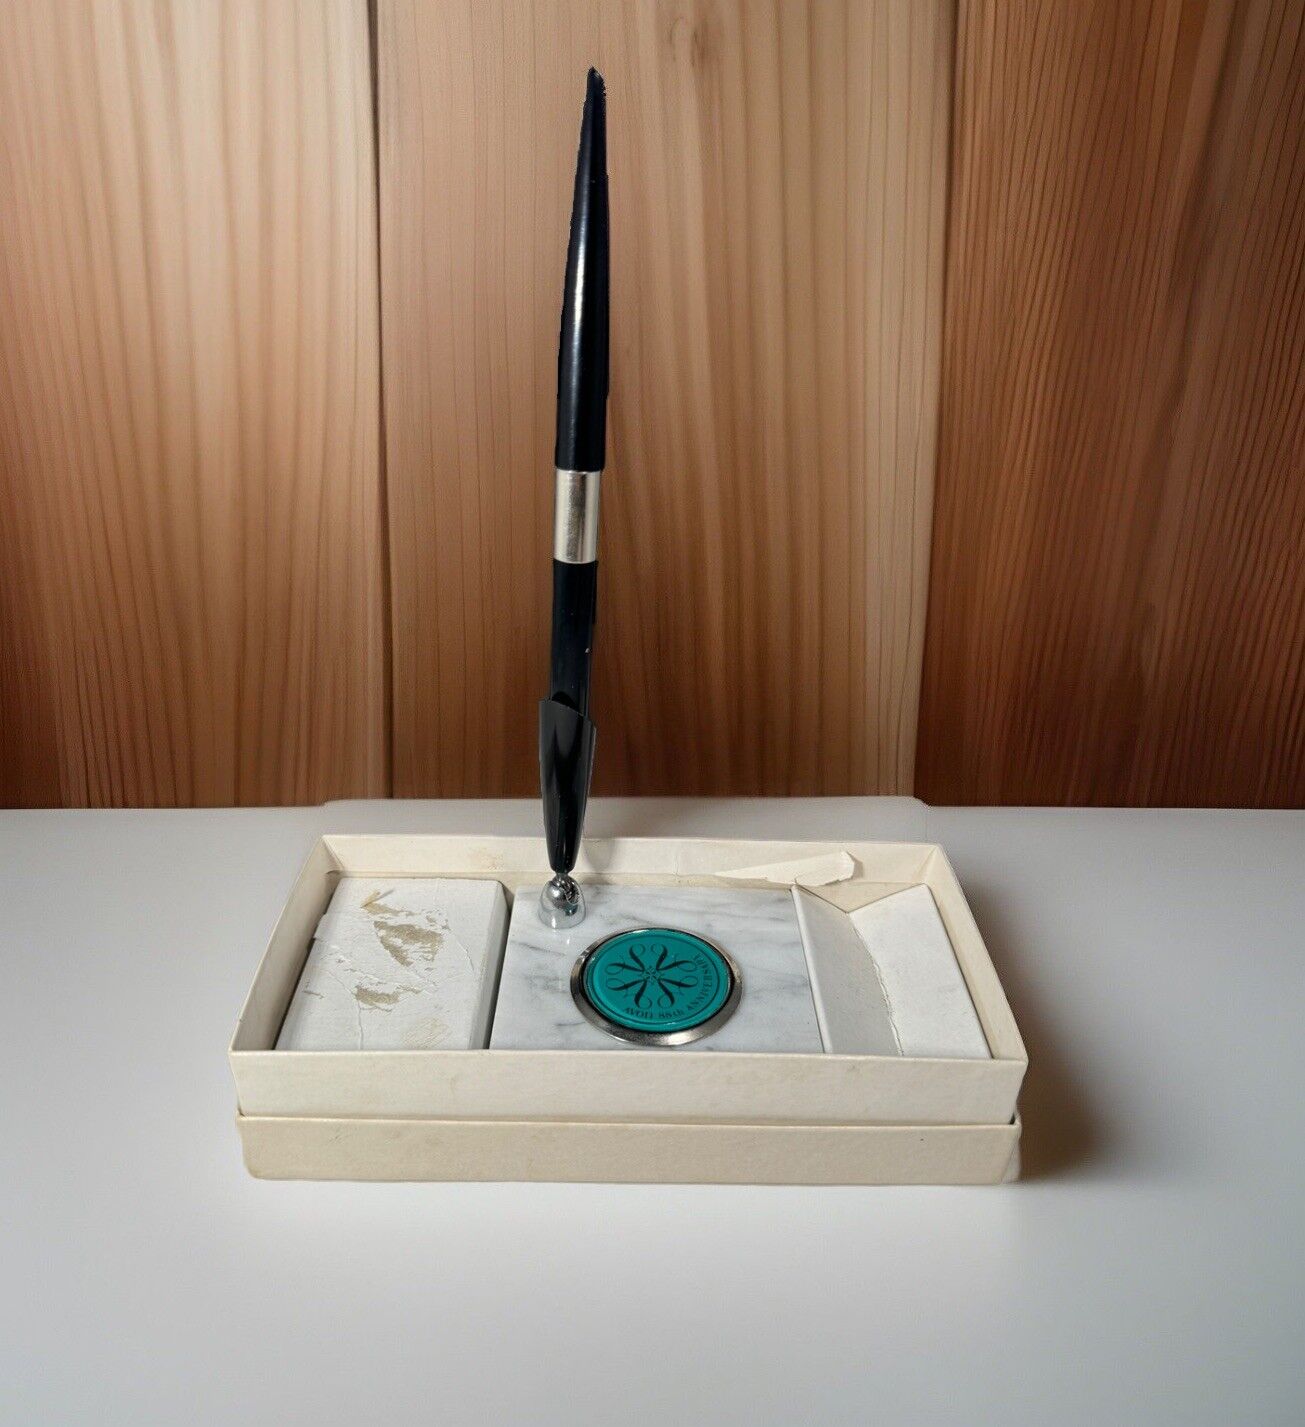 1974 Vintage AVON 88th Anniversary Desk Set Pen Holder With Marble Base